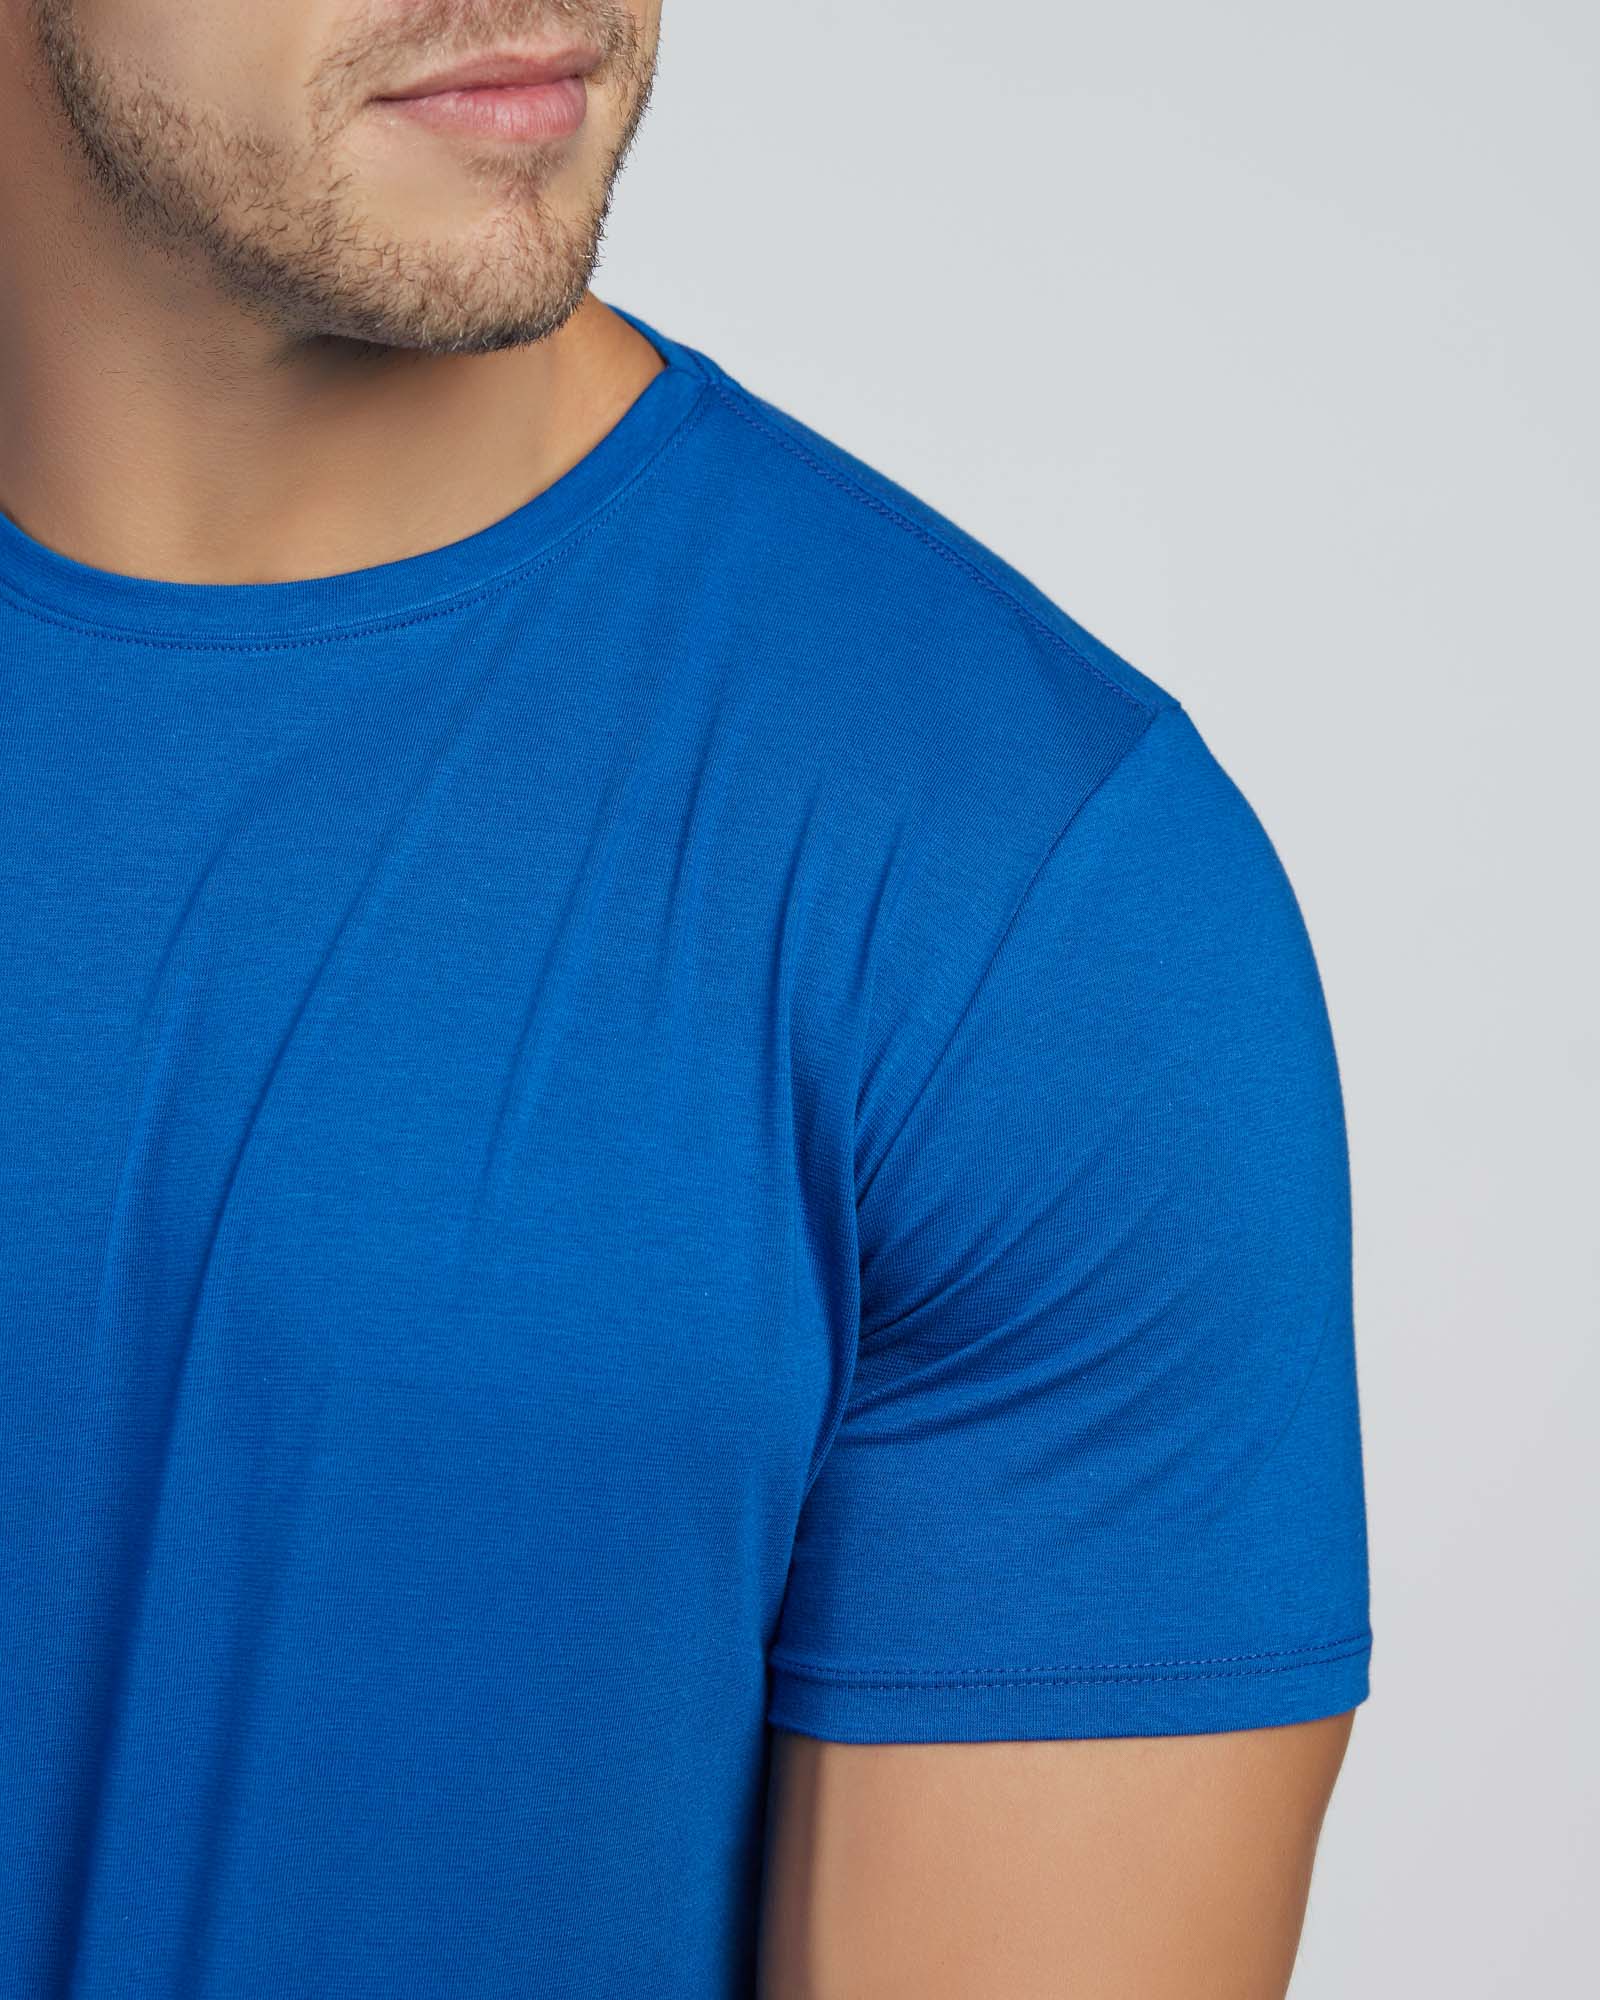 Camiseta Masculina Cotton Azul Royal